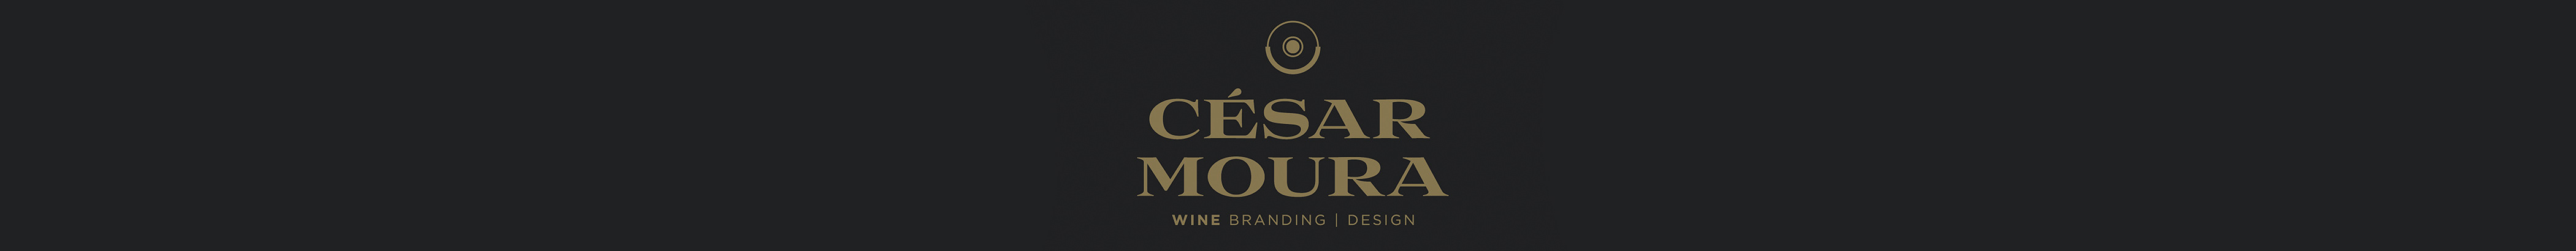 Banner de perfil de César Moura